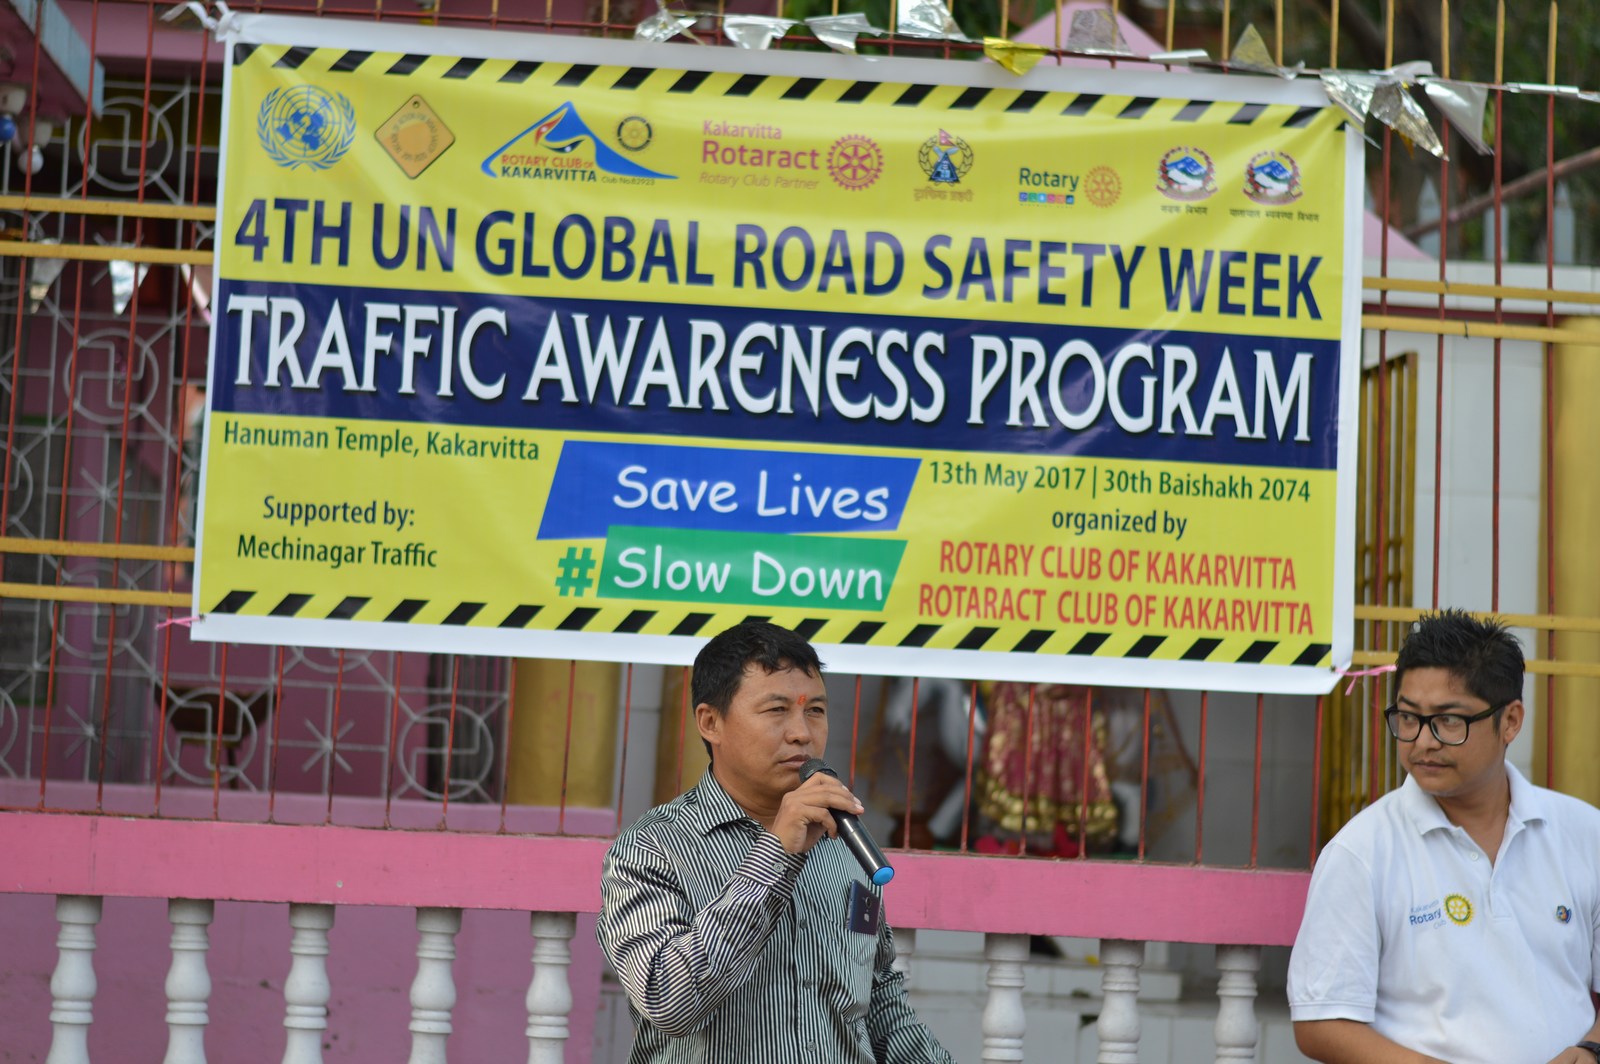 4th-UN-Global-Road-Safety-Week-2017-Traffic-Awareness-Program-Rotary-club-of-Kakarvitta-31